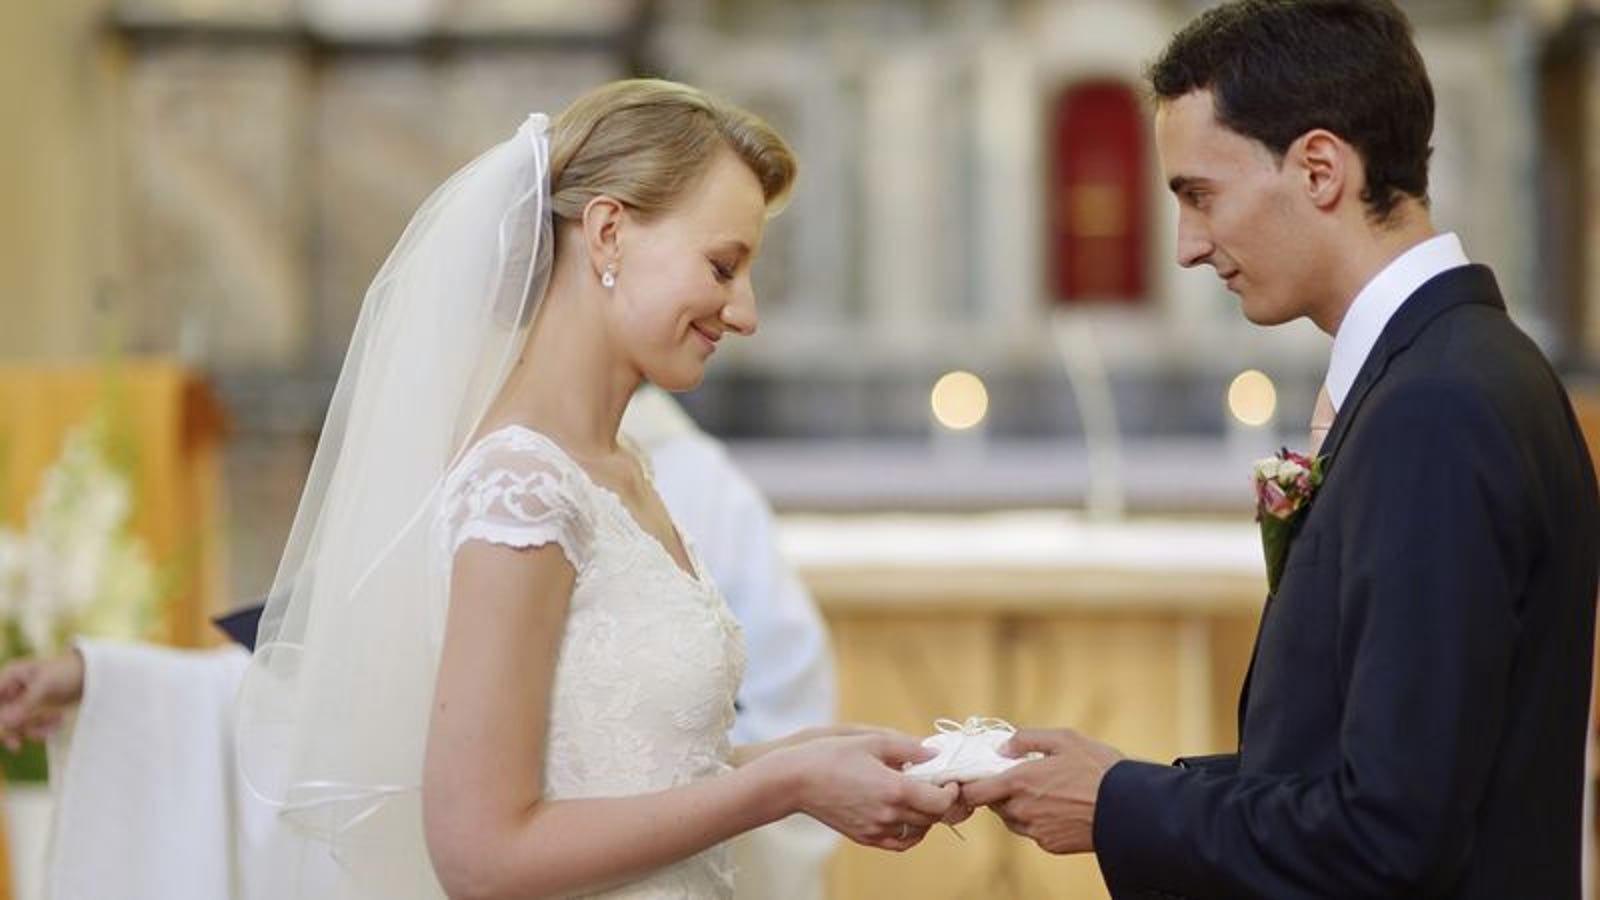 5 Reasons To Get Married Online - 2022 Guide - WeddingStats